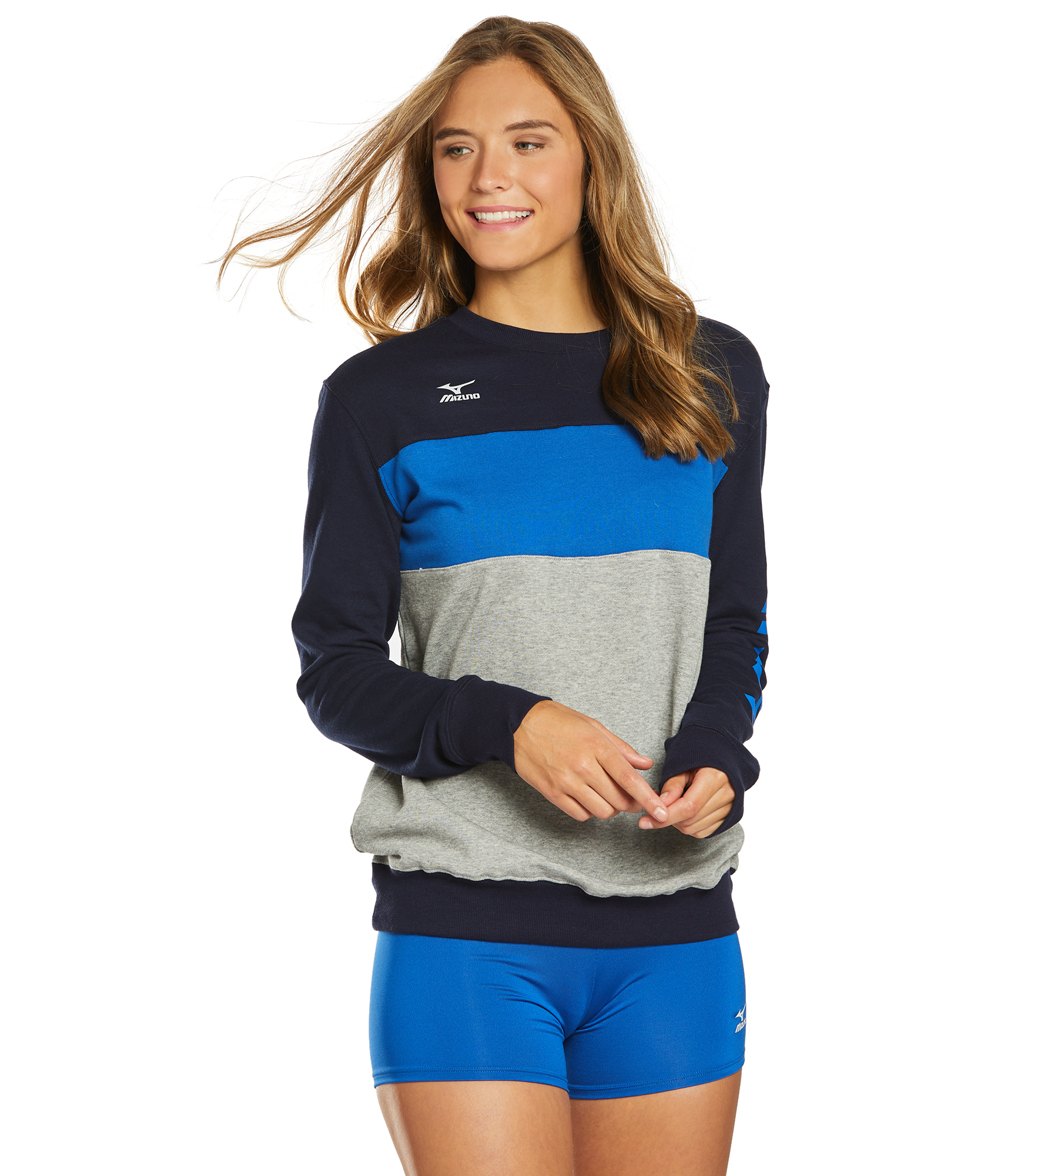 Mizuno Women's Retro Crew Volleyball Sweatshirt - Navy/Royal/Heathered Grey Small Cotton/Spandex - Swimoutlet.com